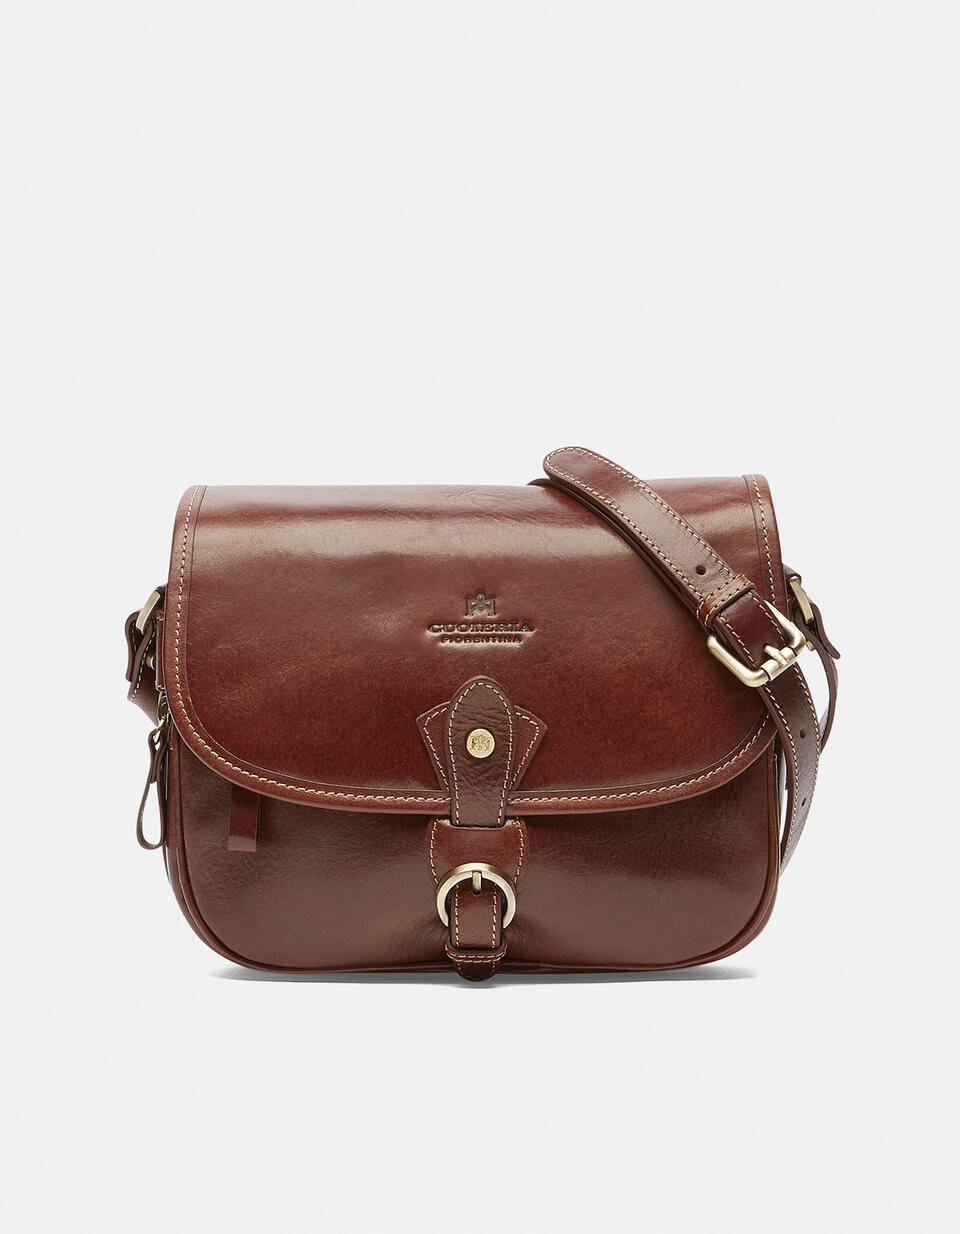 Leather Messenger bag - Messenger Bags - WOMEN'S BAGS | bags MARRONE - Messenger Bags - WOMEN'S BAGS | bagsCuoieria Fiorentina